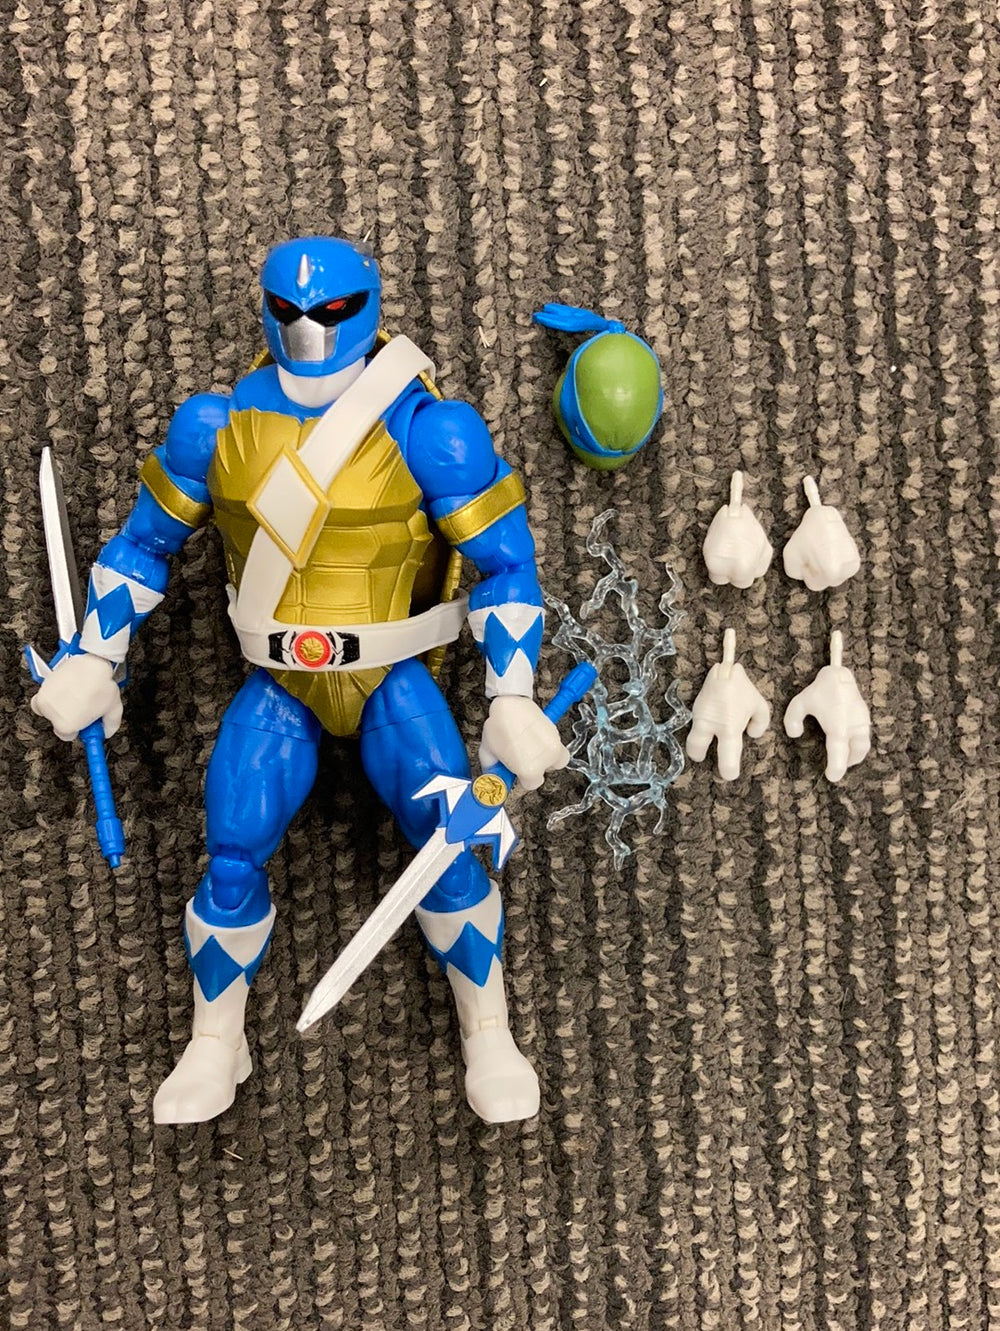 Power Rangers Lightning Collection X TMNT Morphed Leonardo